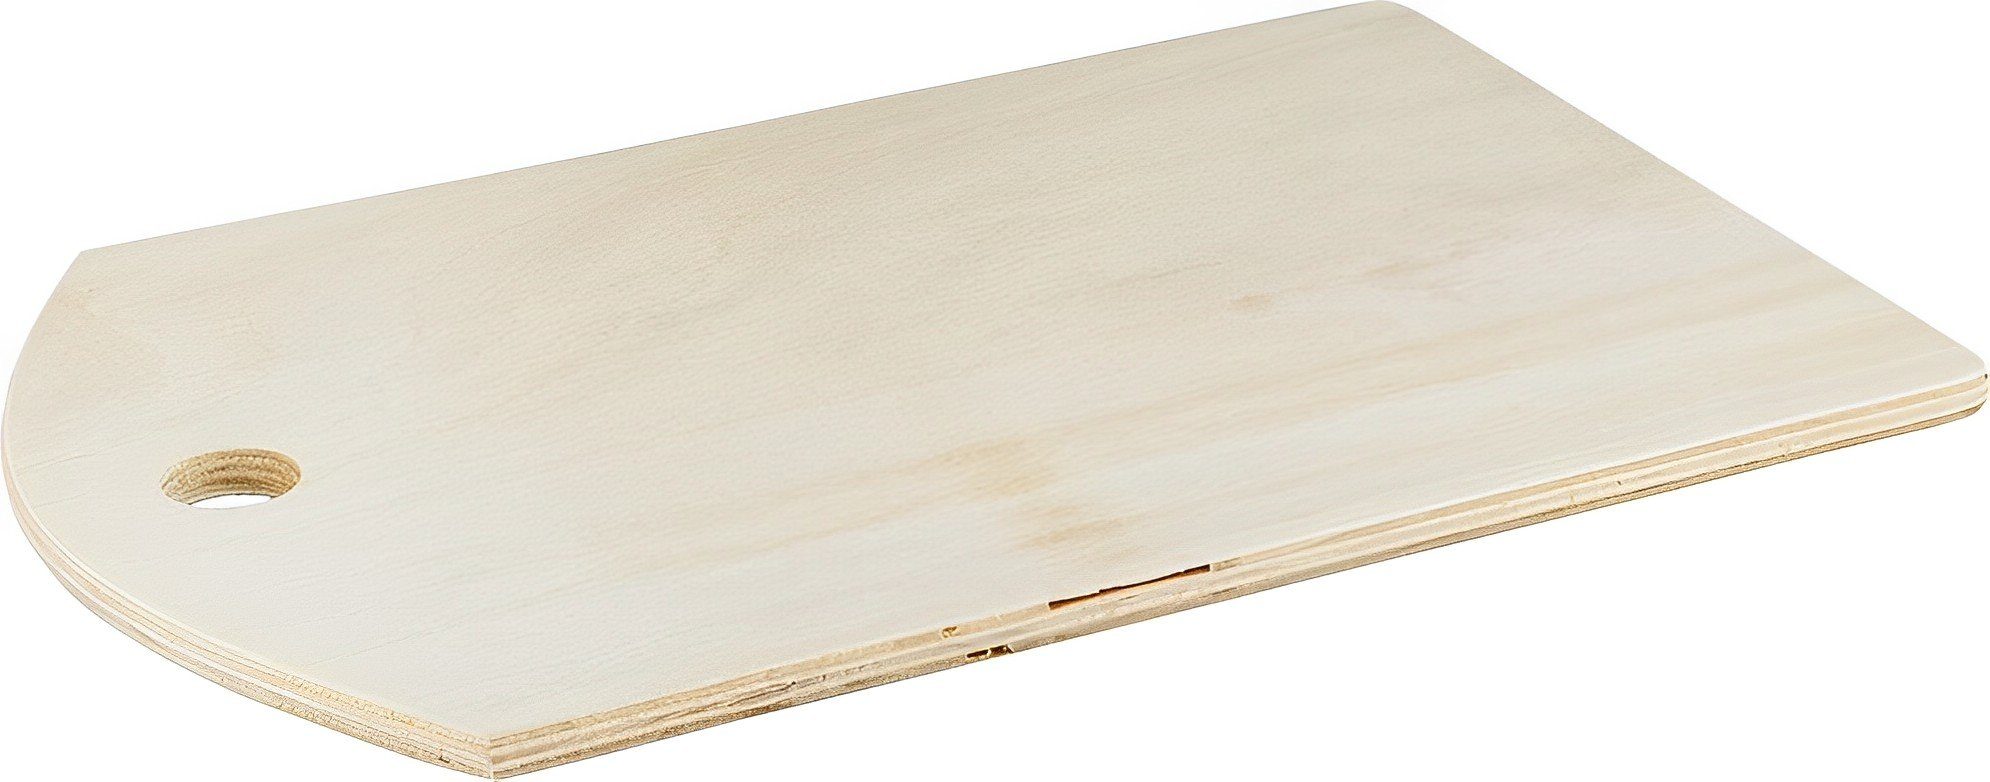 Dekonaz Schneidebrett Kar Holz Schneidebrett Panel, 34x22cm, Holz